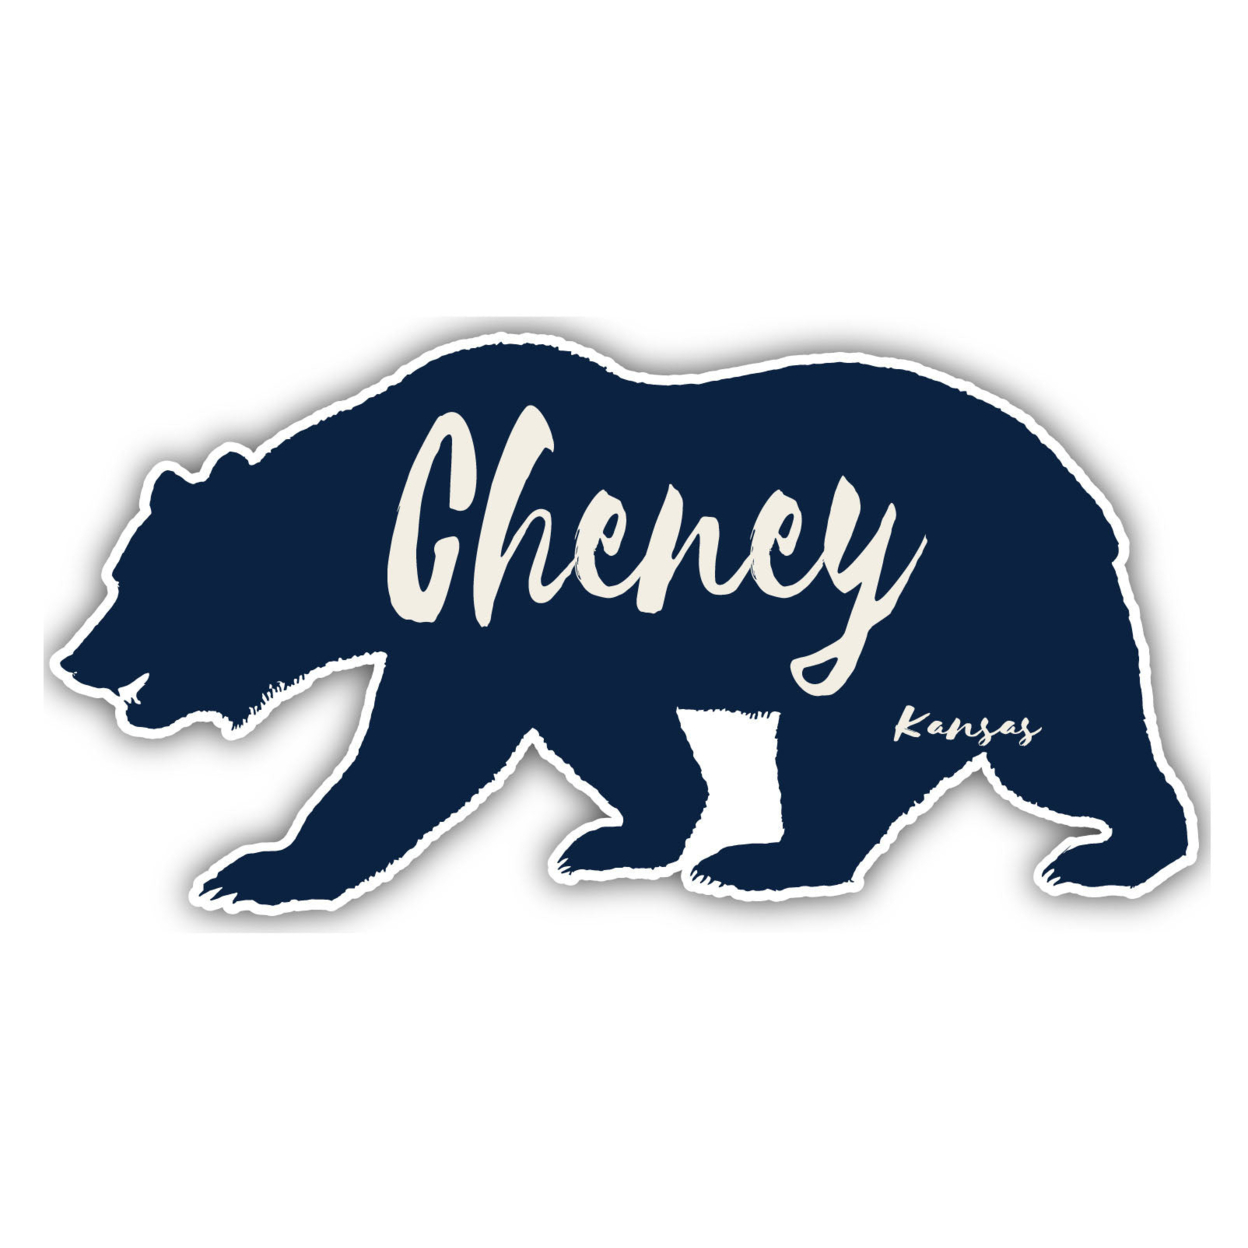 Cheney Kansas Souvenir Decorative Stickers (Choose Theme And Size) - 4-Pack, 8-Inch, Bear